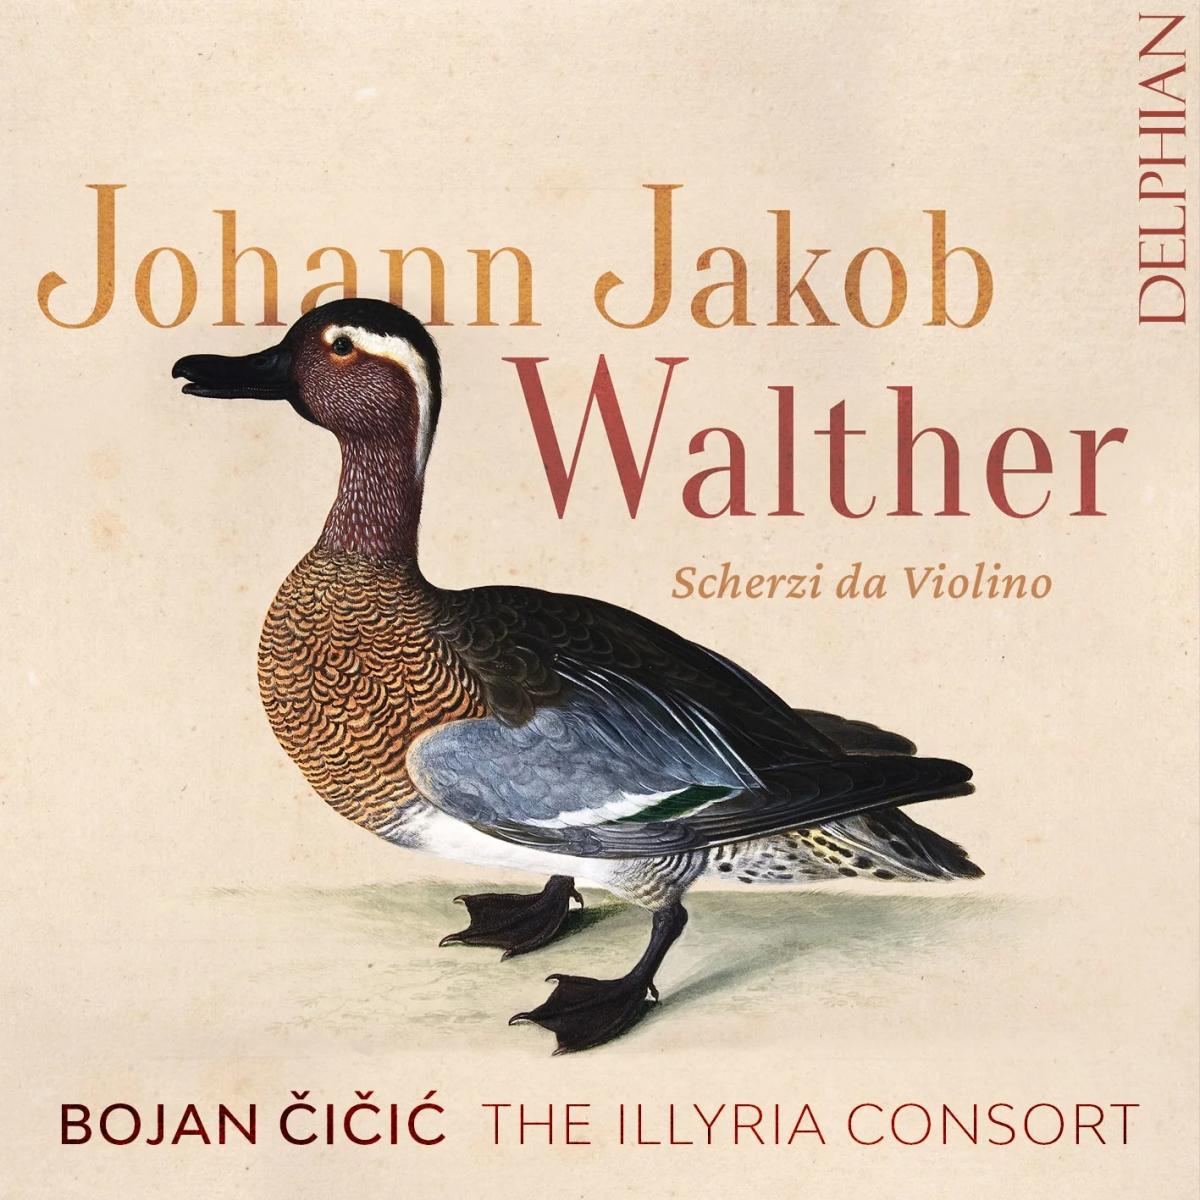 Johann Jakob Walther: Scherzi da Violino - Bojan Čičić and the Illyria Consort